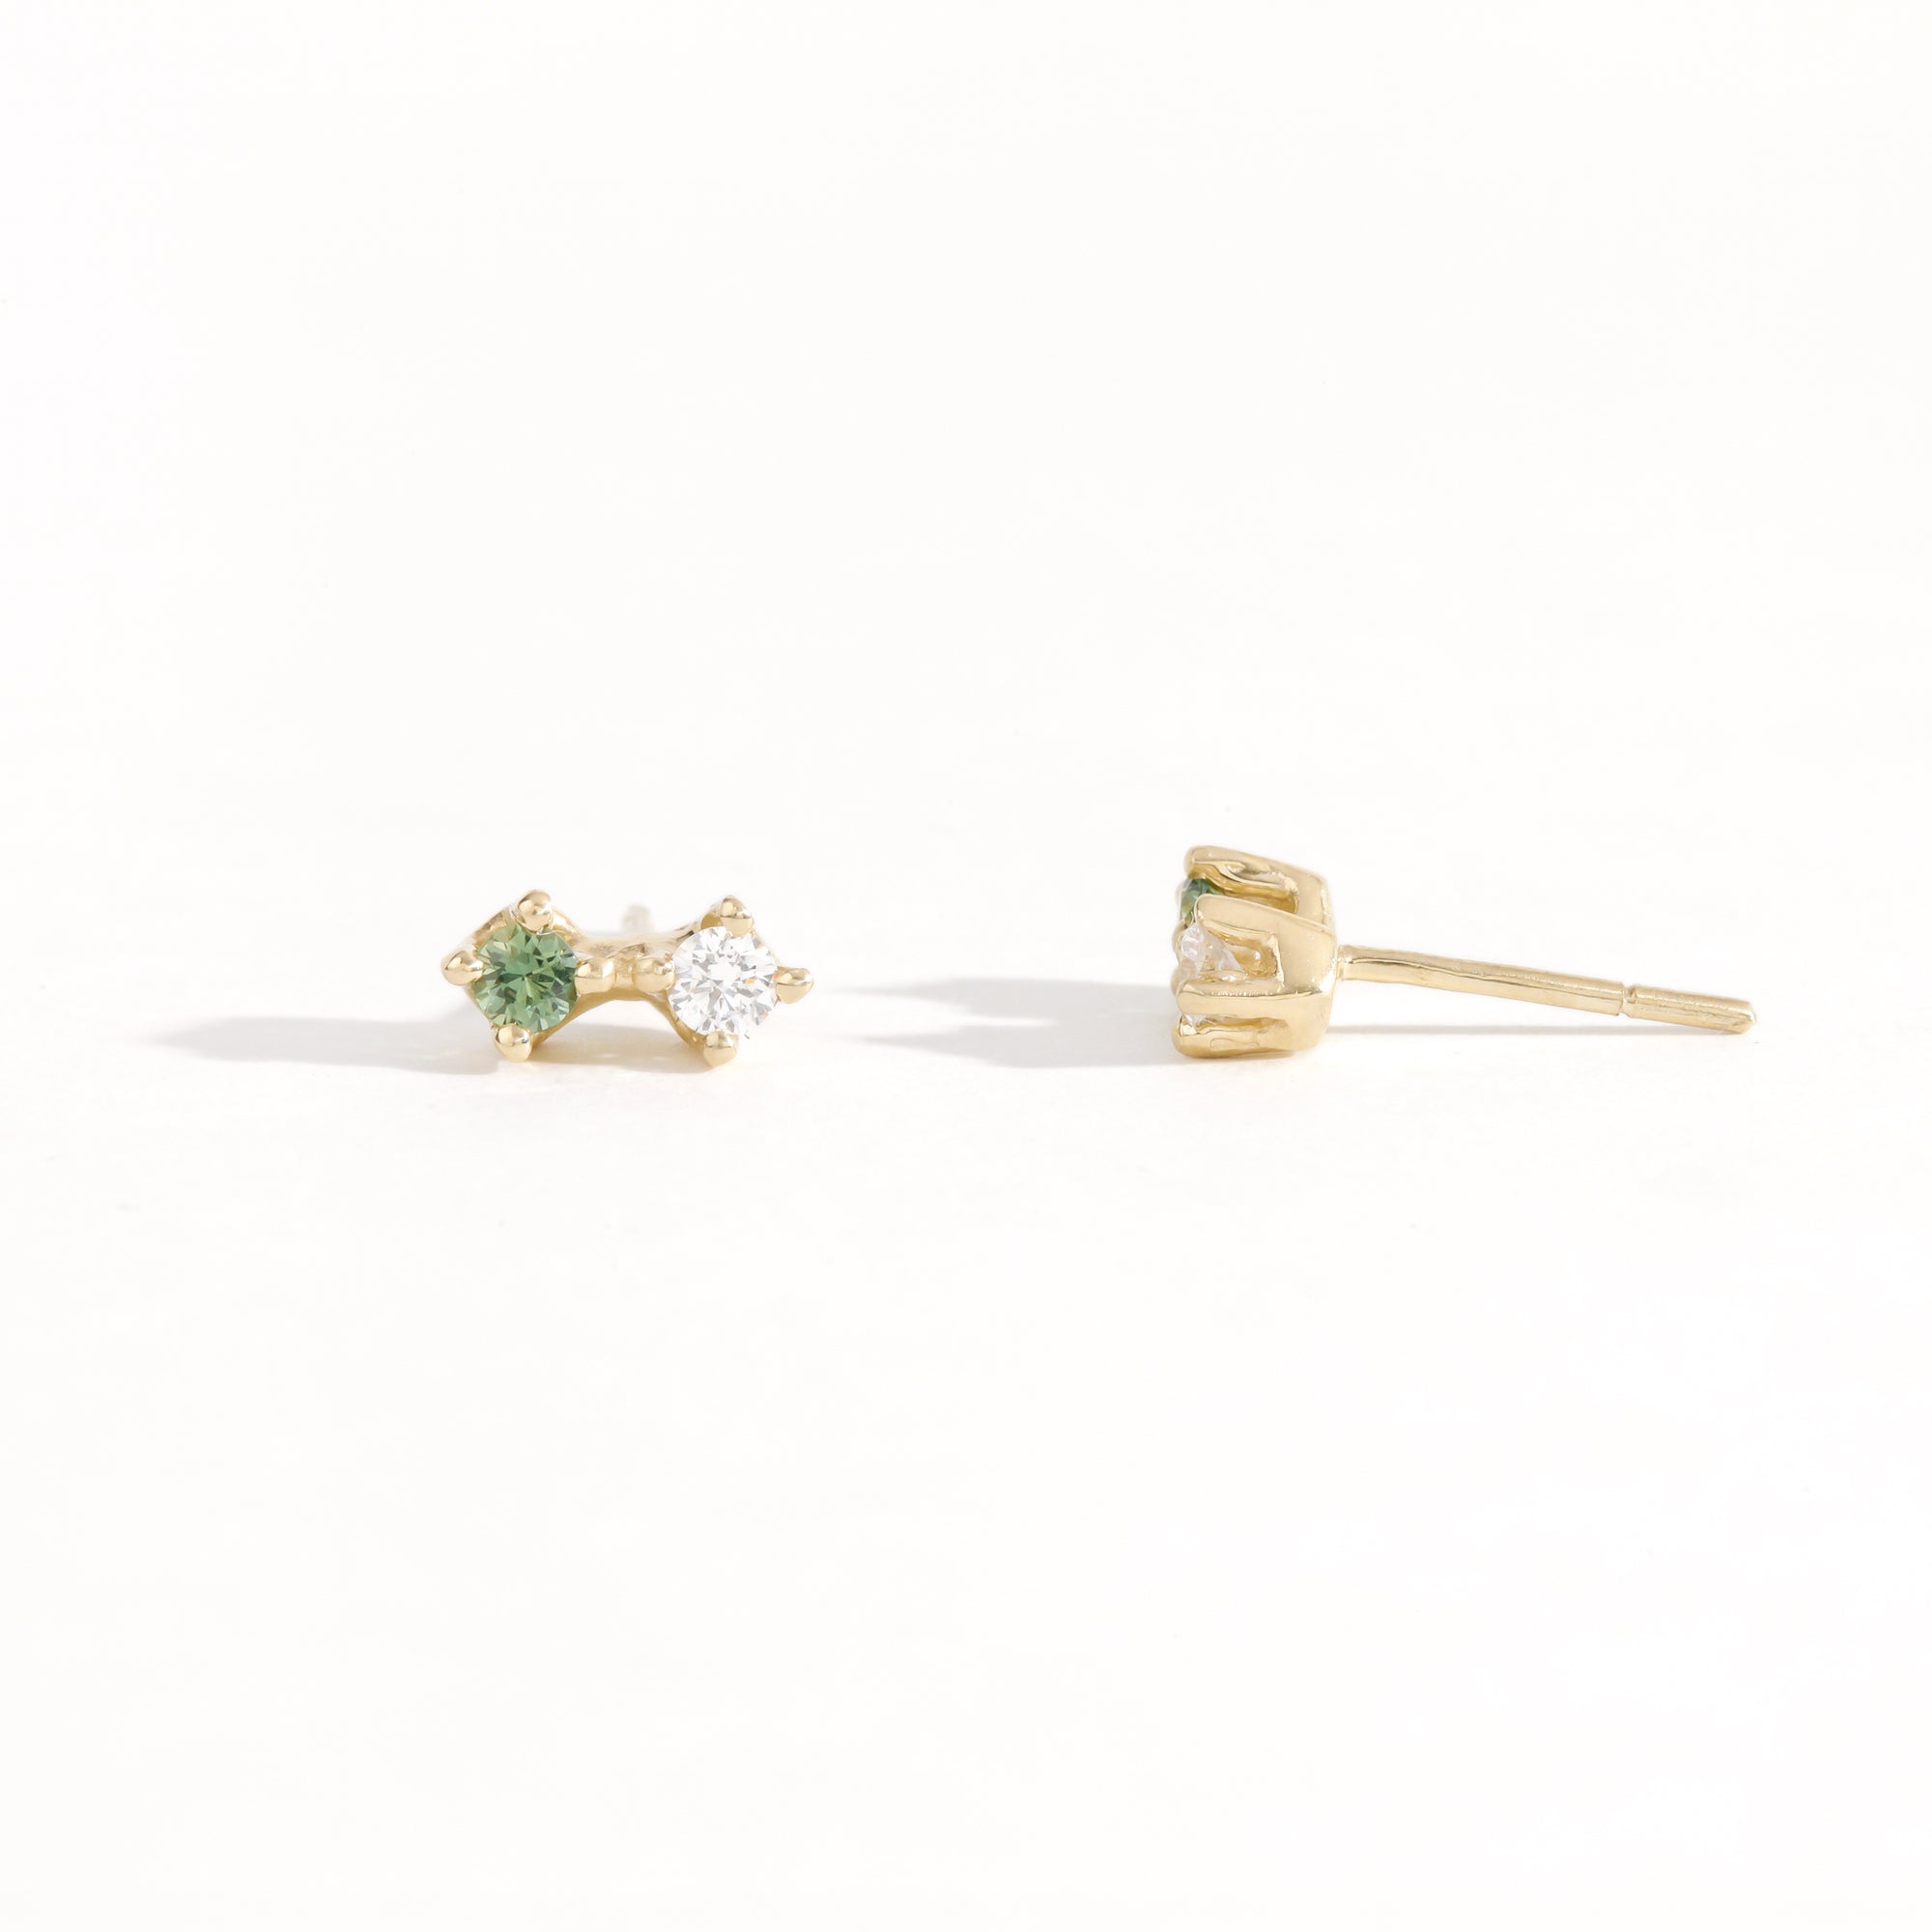 Pair of yellow gold studs featuring white diamond and sea foam green sapphires. Bespoke, handmade jewellery.